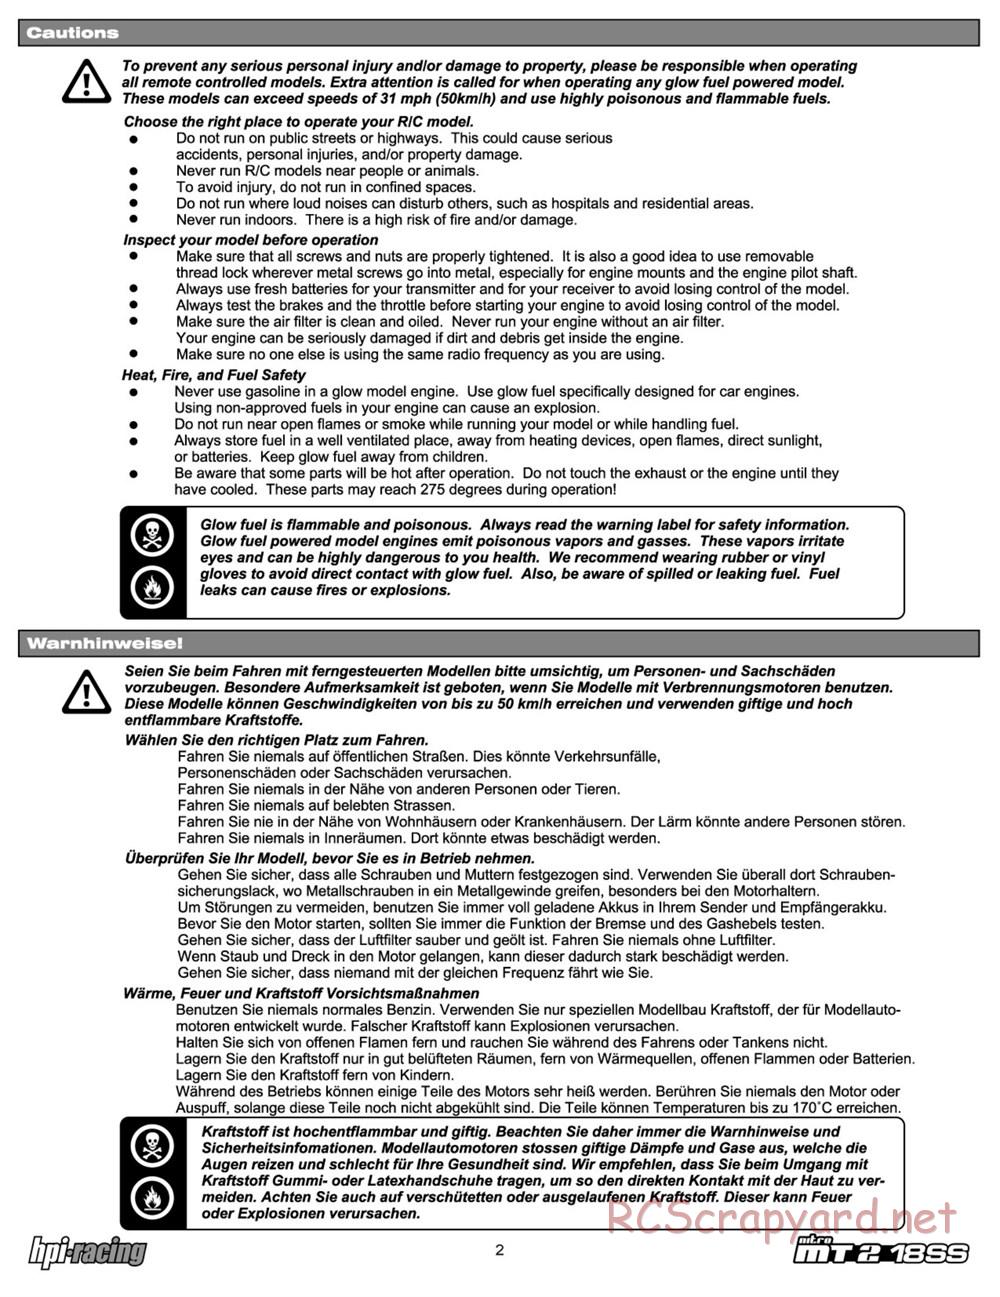 HPI - Nitro MT2 18SS - Manual - Page 2